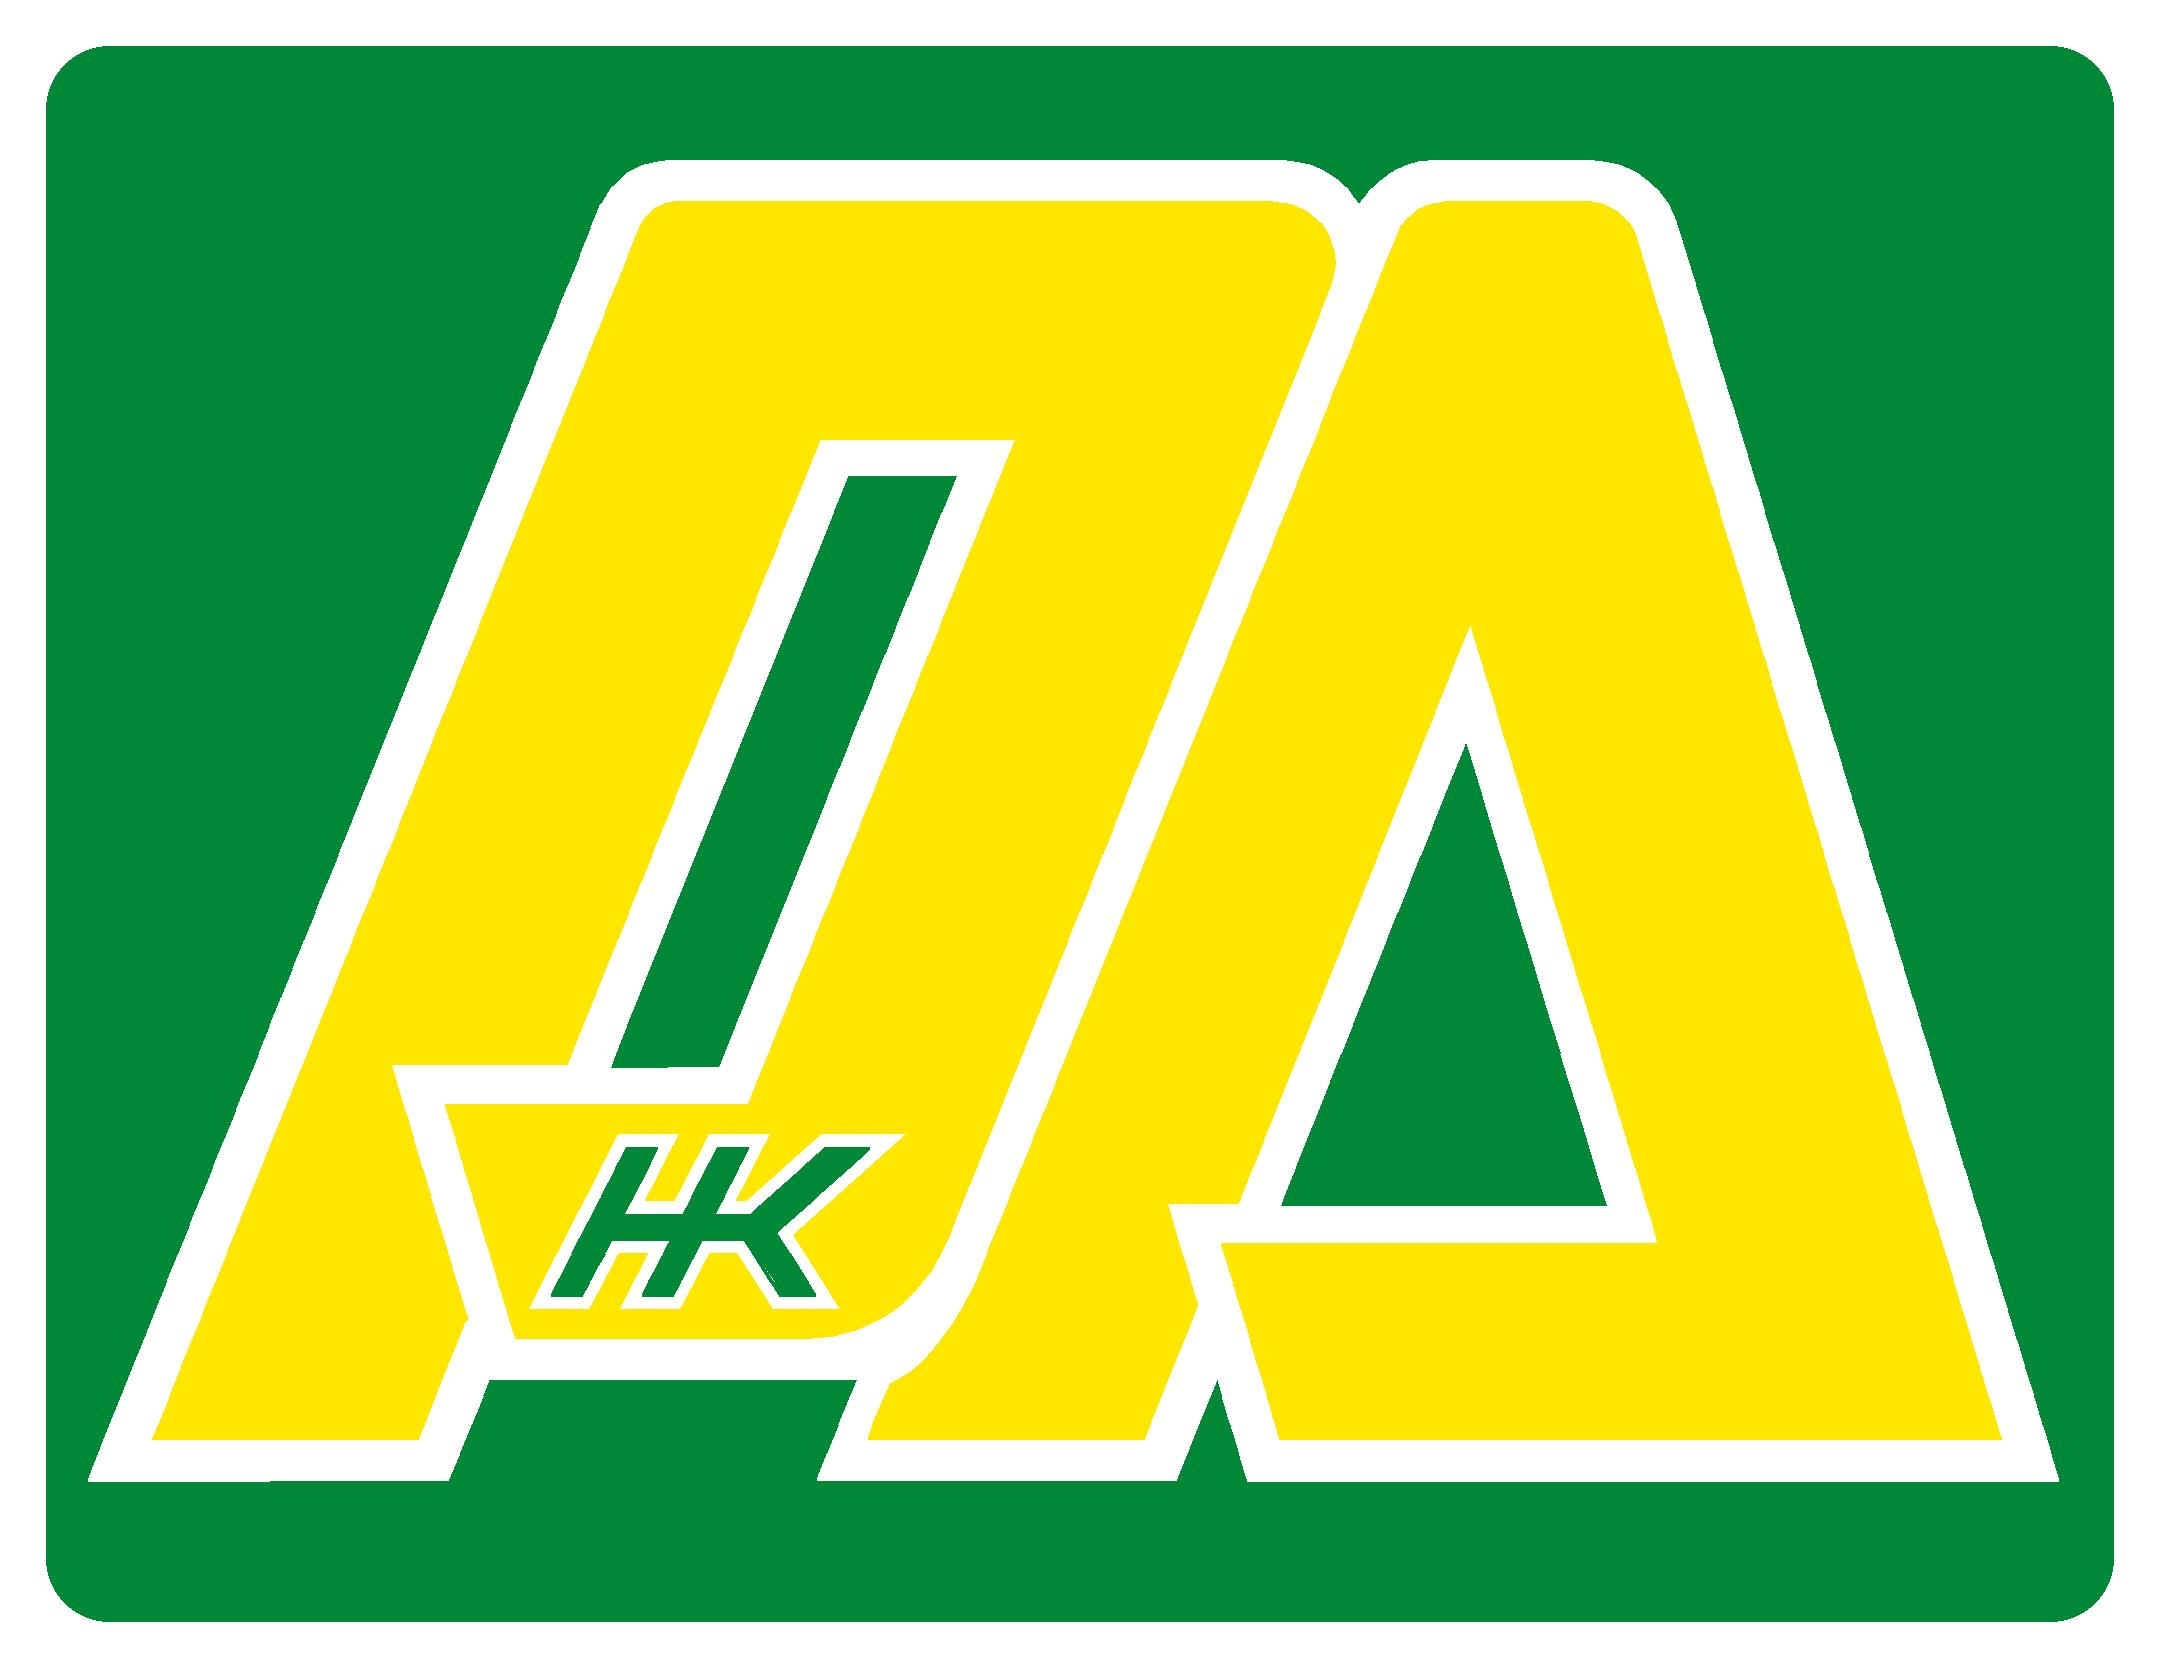 Self Photos / Files - HKPA logo